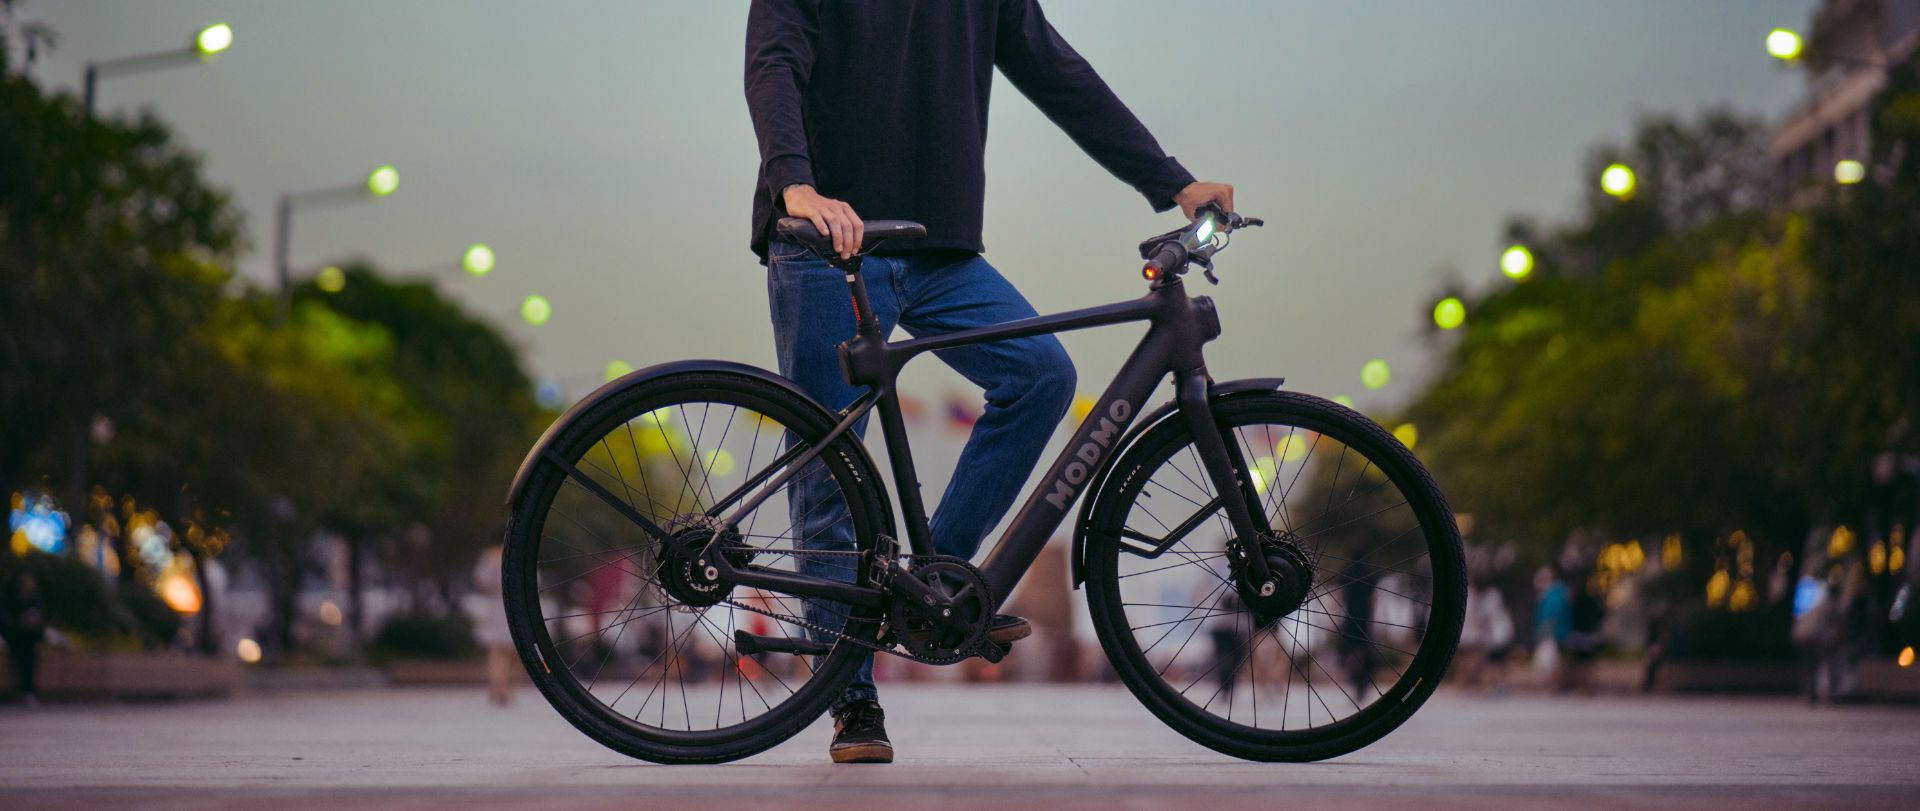 Modmo Saigon+ Electric Bicycle - RRP £2800 - Size M (Rider: 155-175cm) - Image 5 of 15